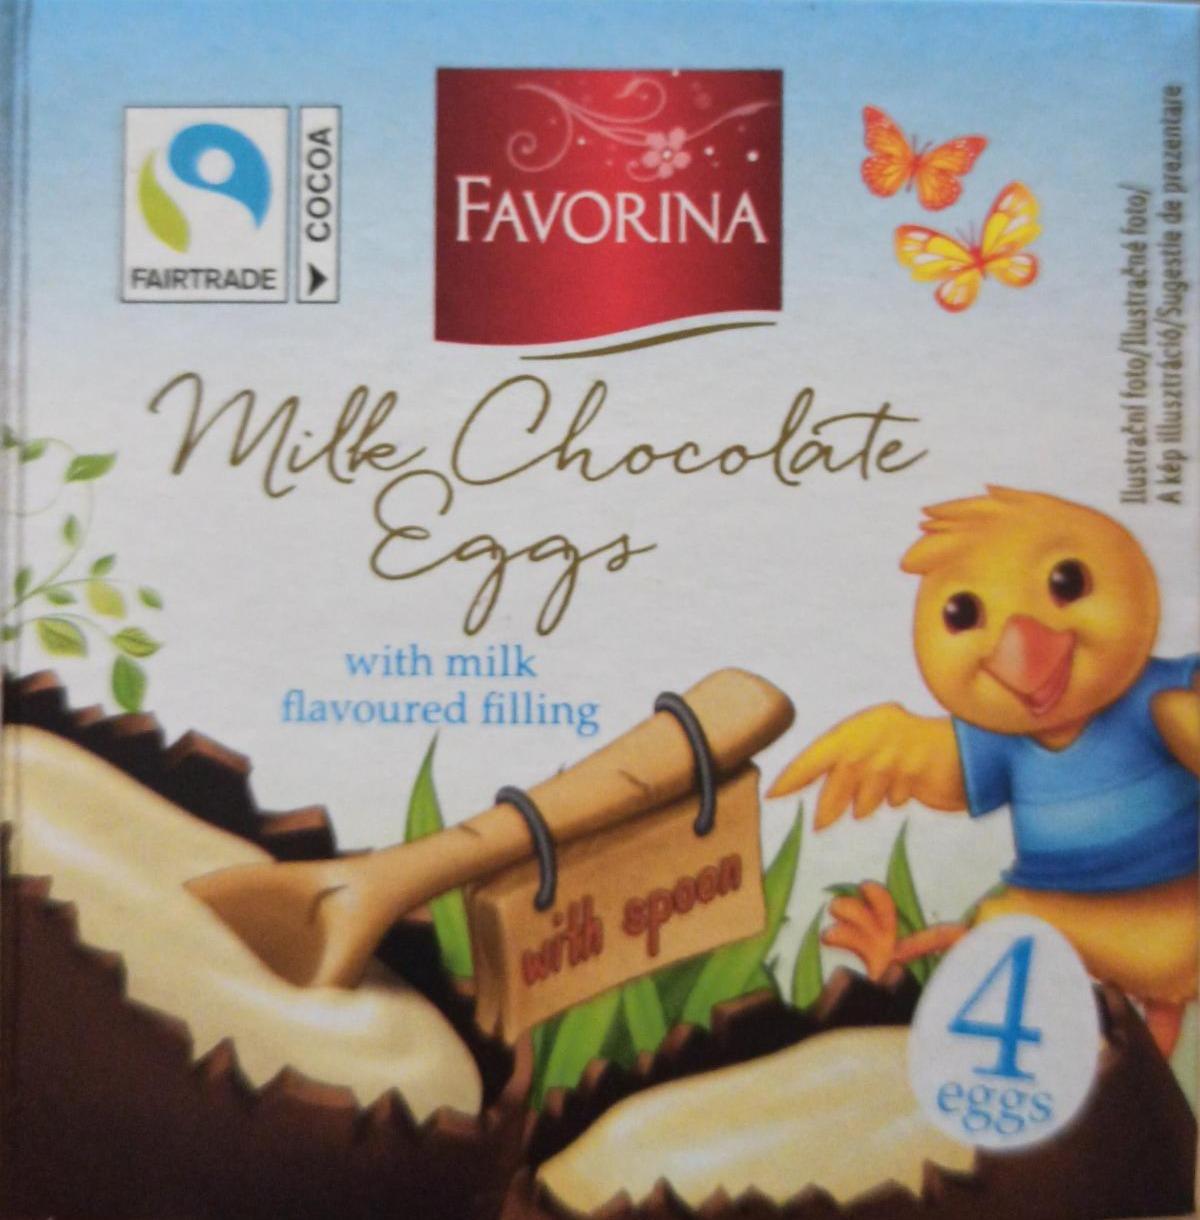 Fotografie - Milk Chocolate Eggs with milk flavoured filling Favorina